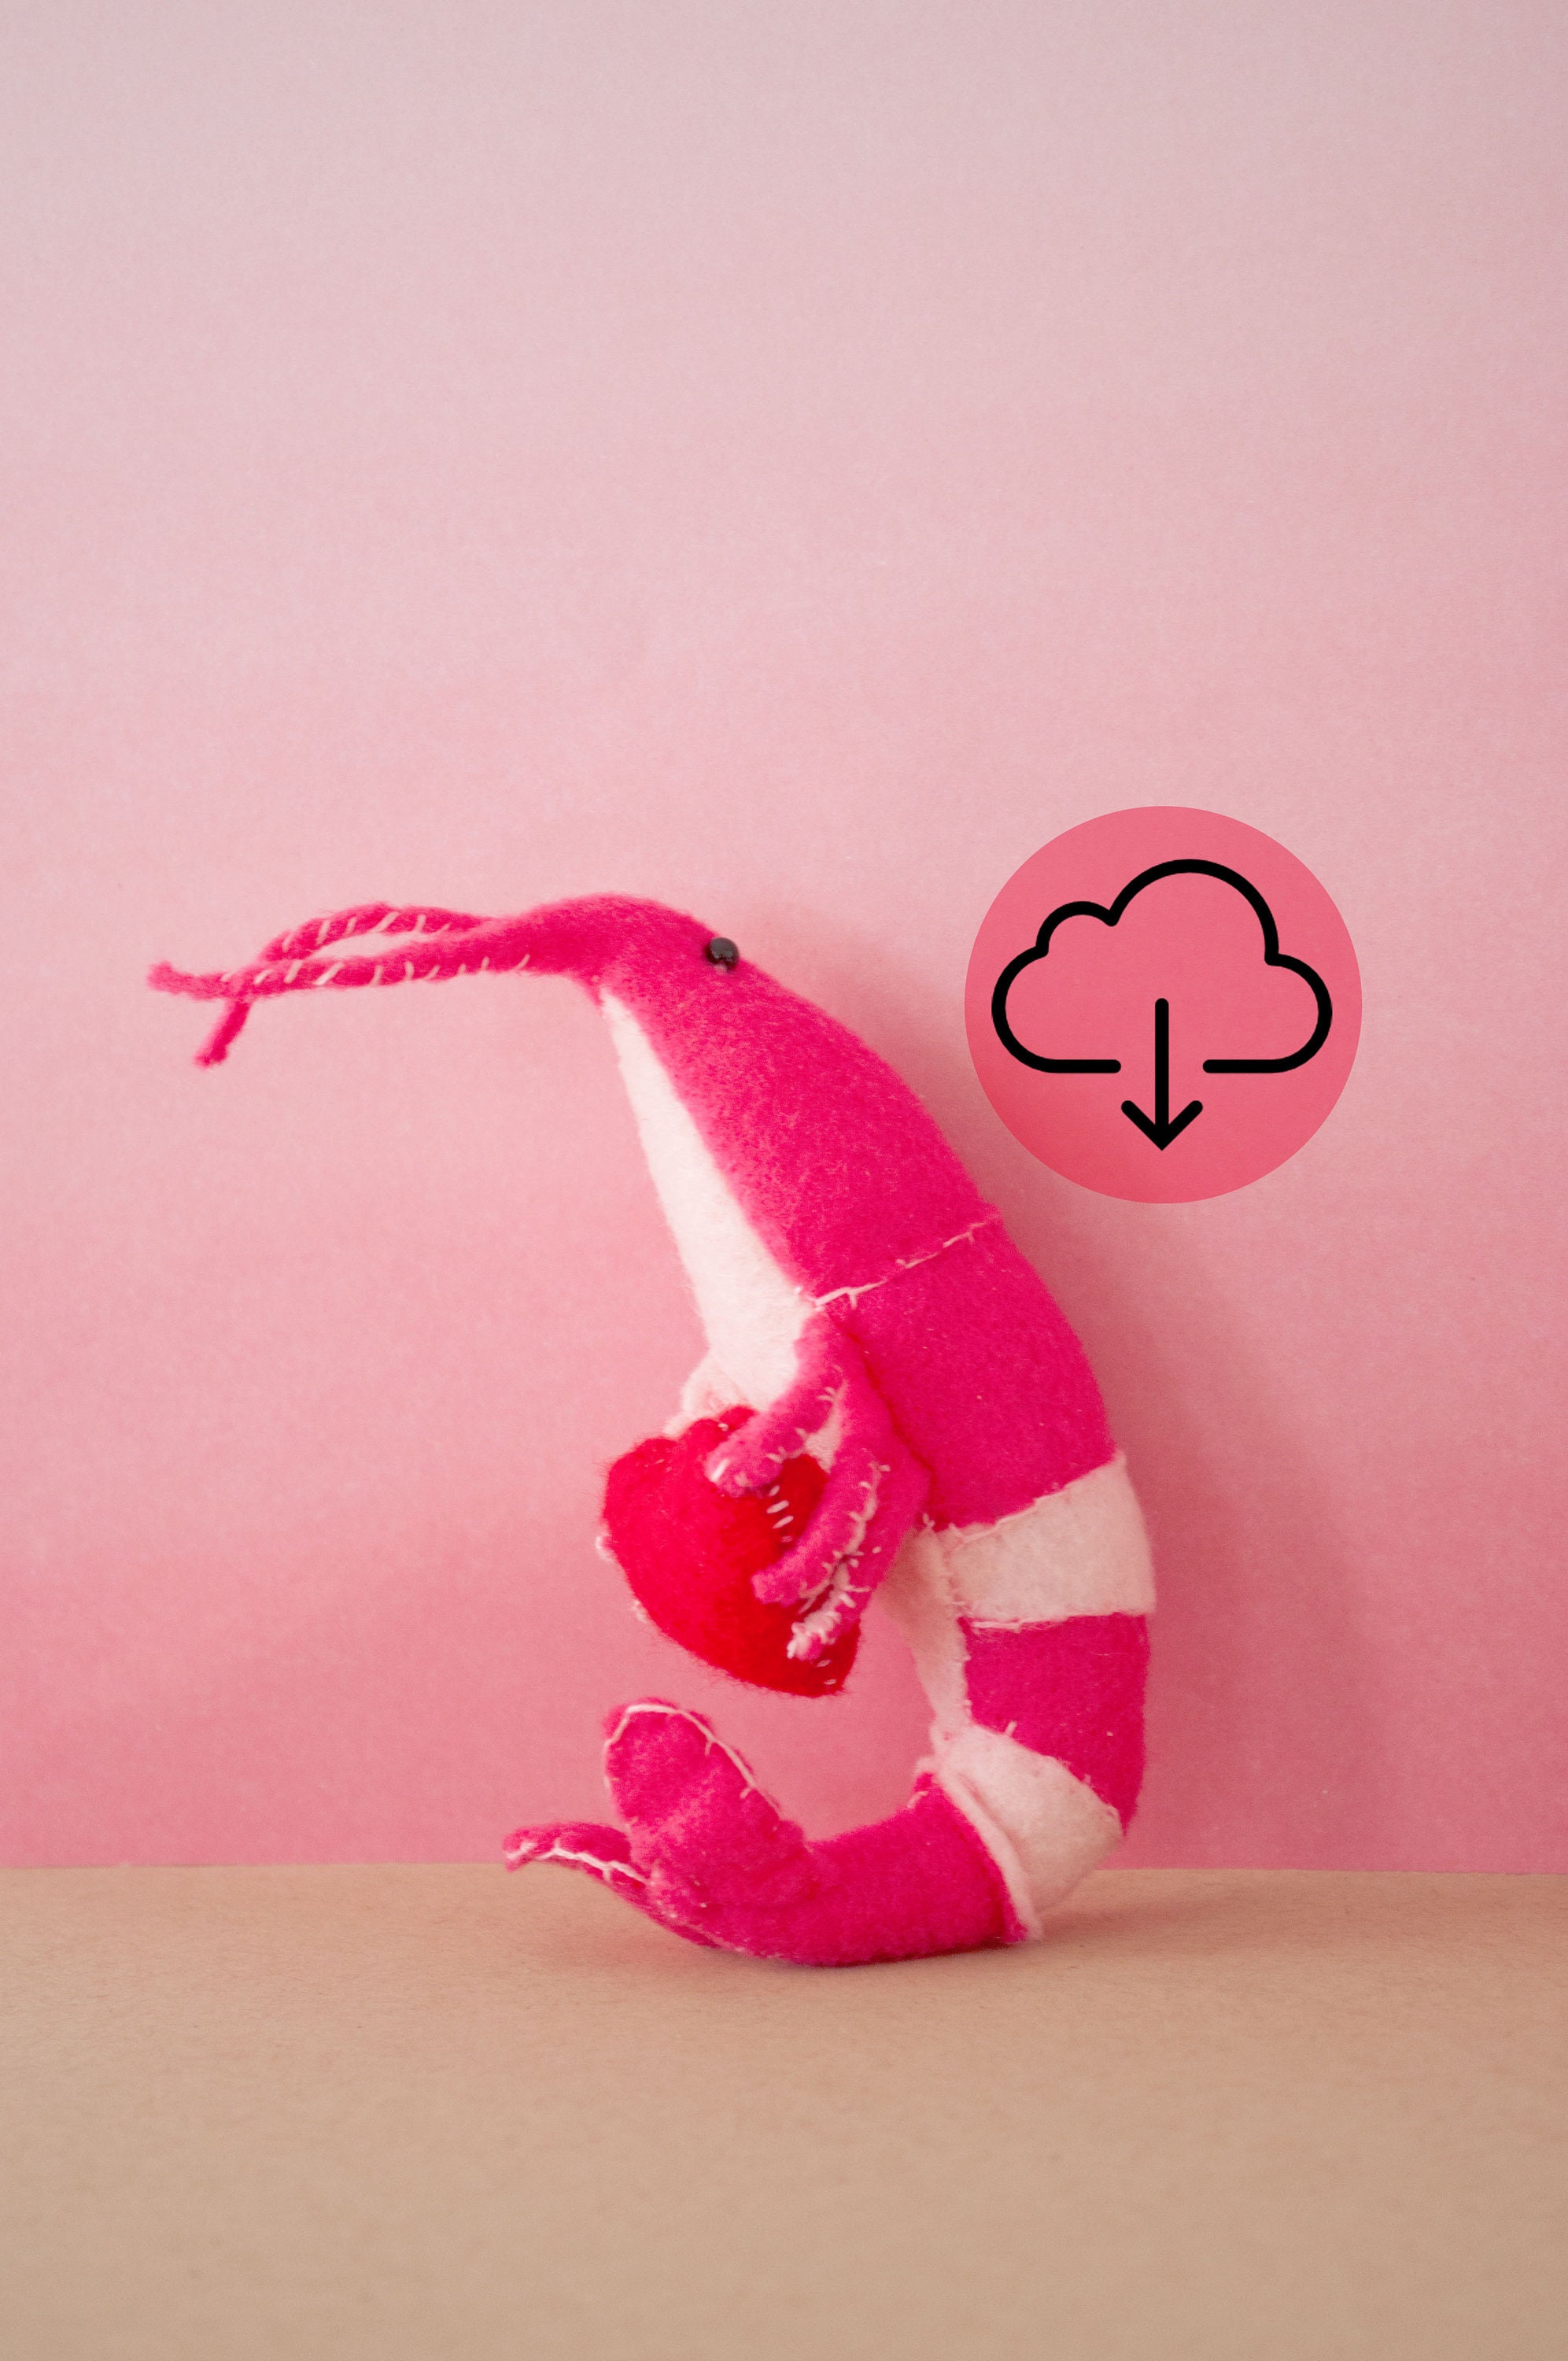 Shrimp Sewing KIT, Stuffed Toy Shrimp Diy, Gift for Creative